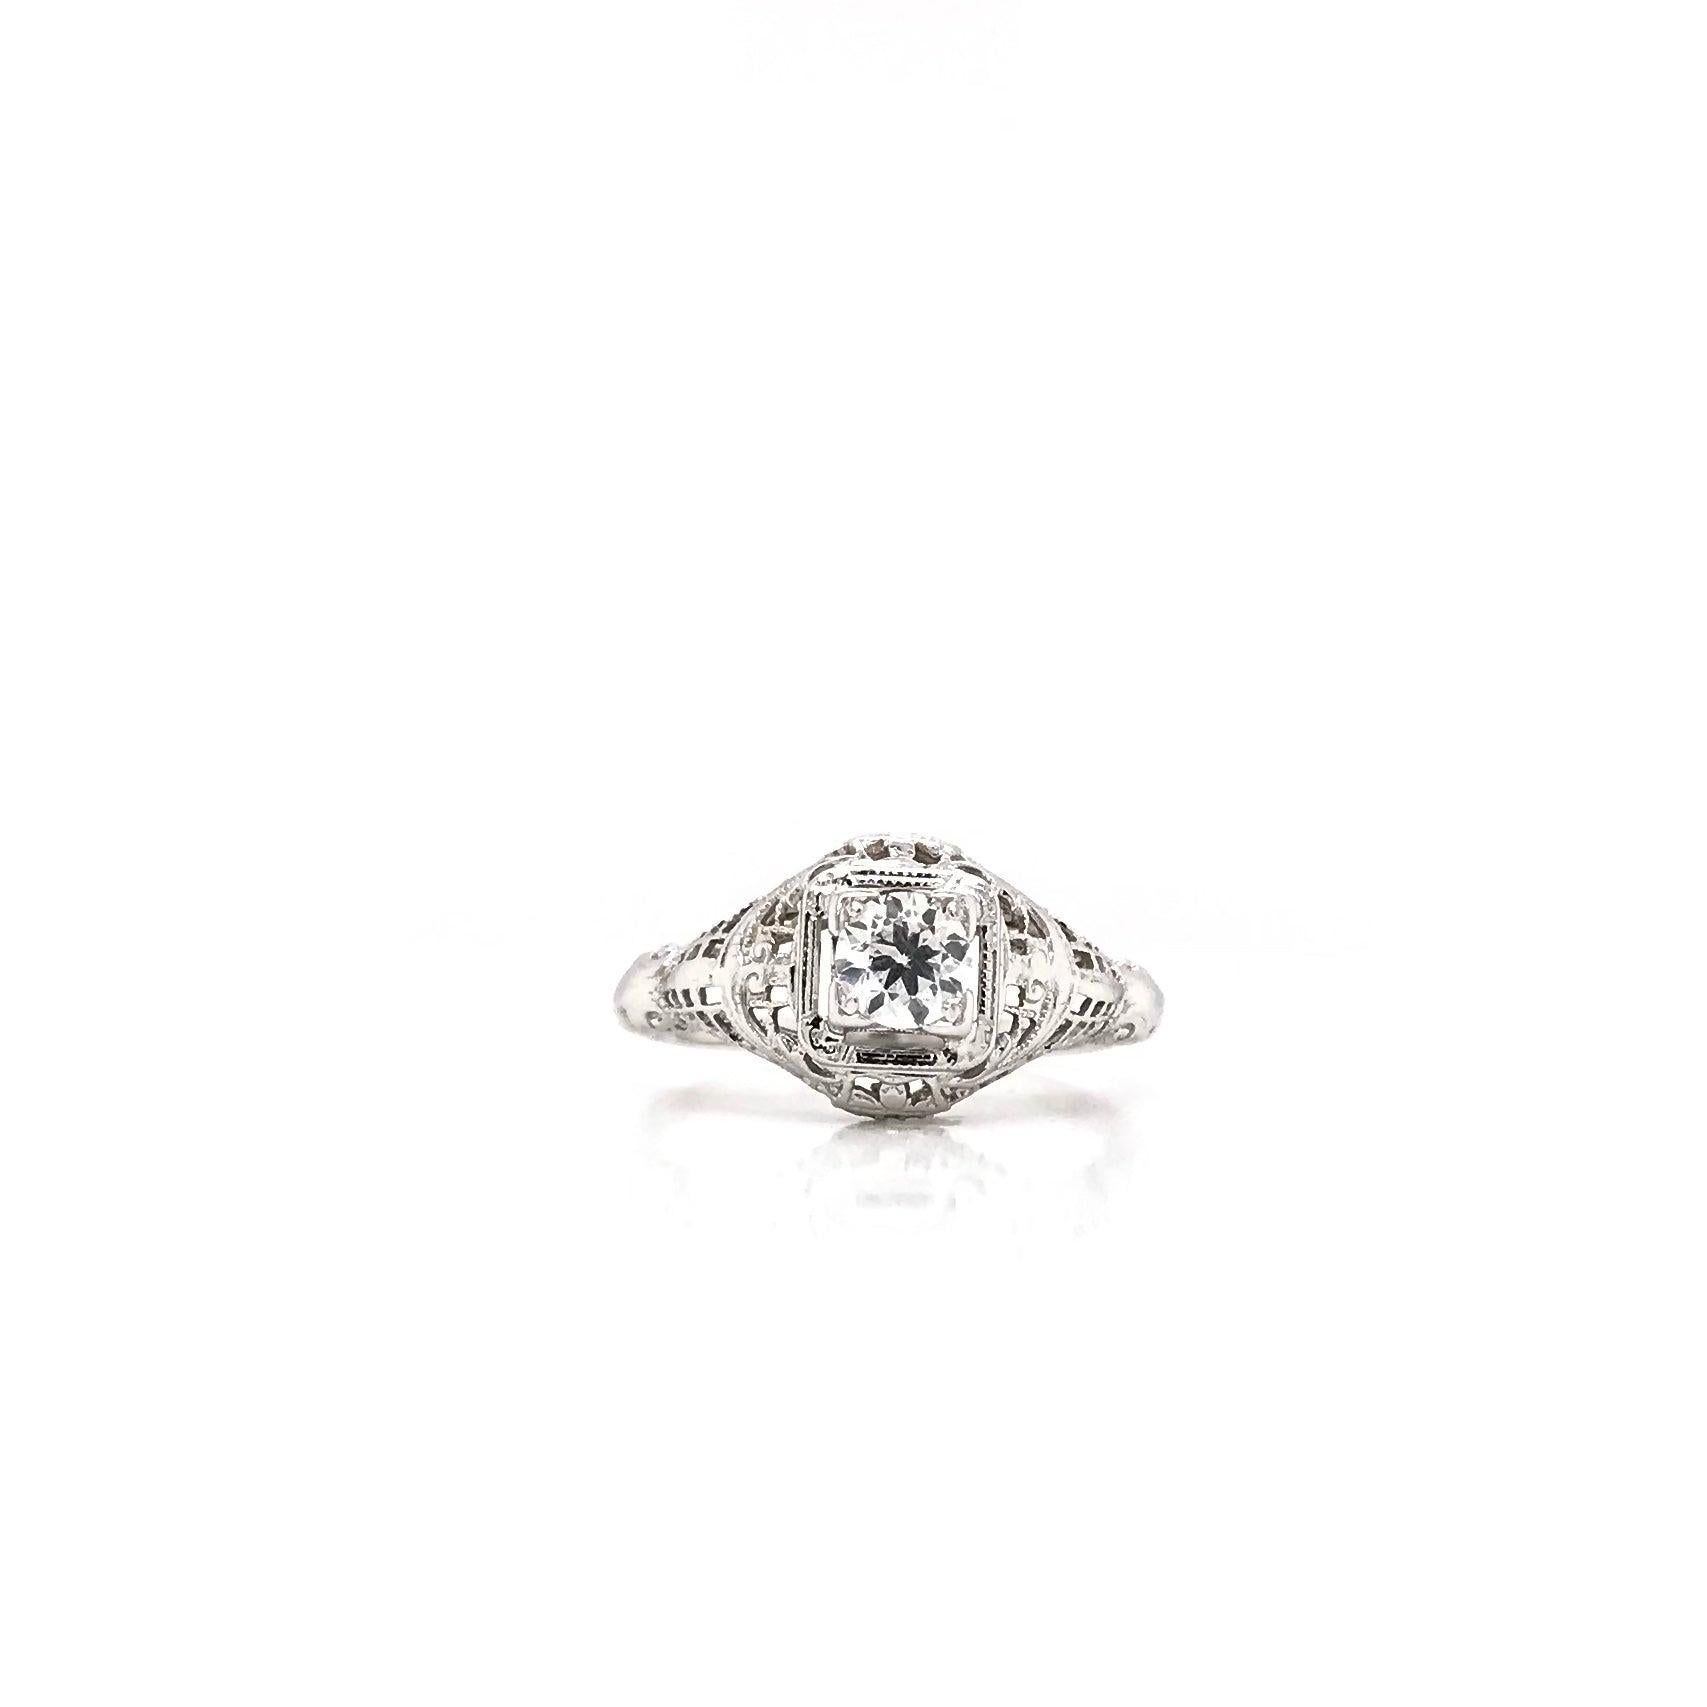 Antique Art Deco Filigree Solitaire Style Diamond Ring For Sale 1